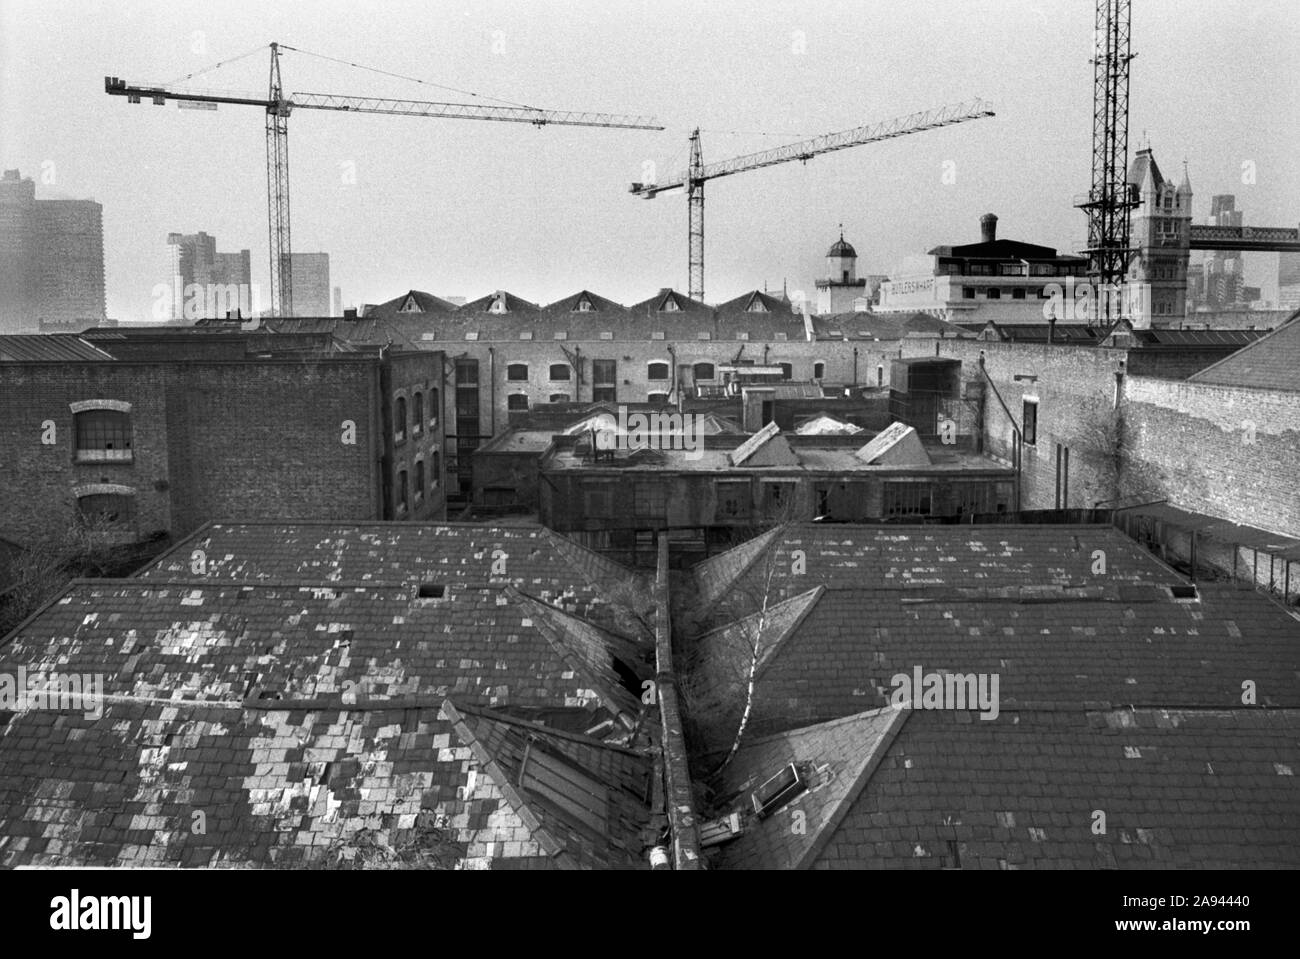 Butlers Wharf London Docklands Development 1980 s UK Gebäude. Verfallene Lagerhäuser Southwark, Bermondsey, South East London. 1987 HOMER SYKES Stockfoto